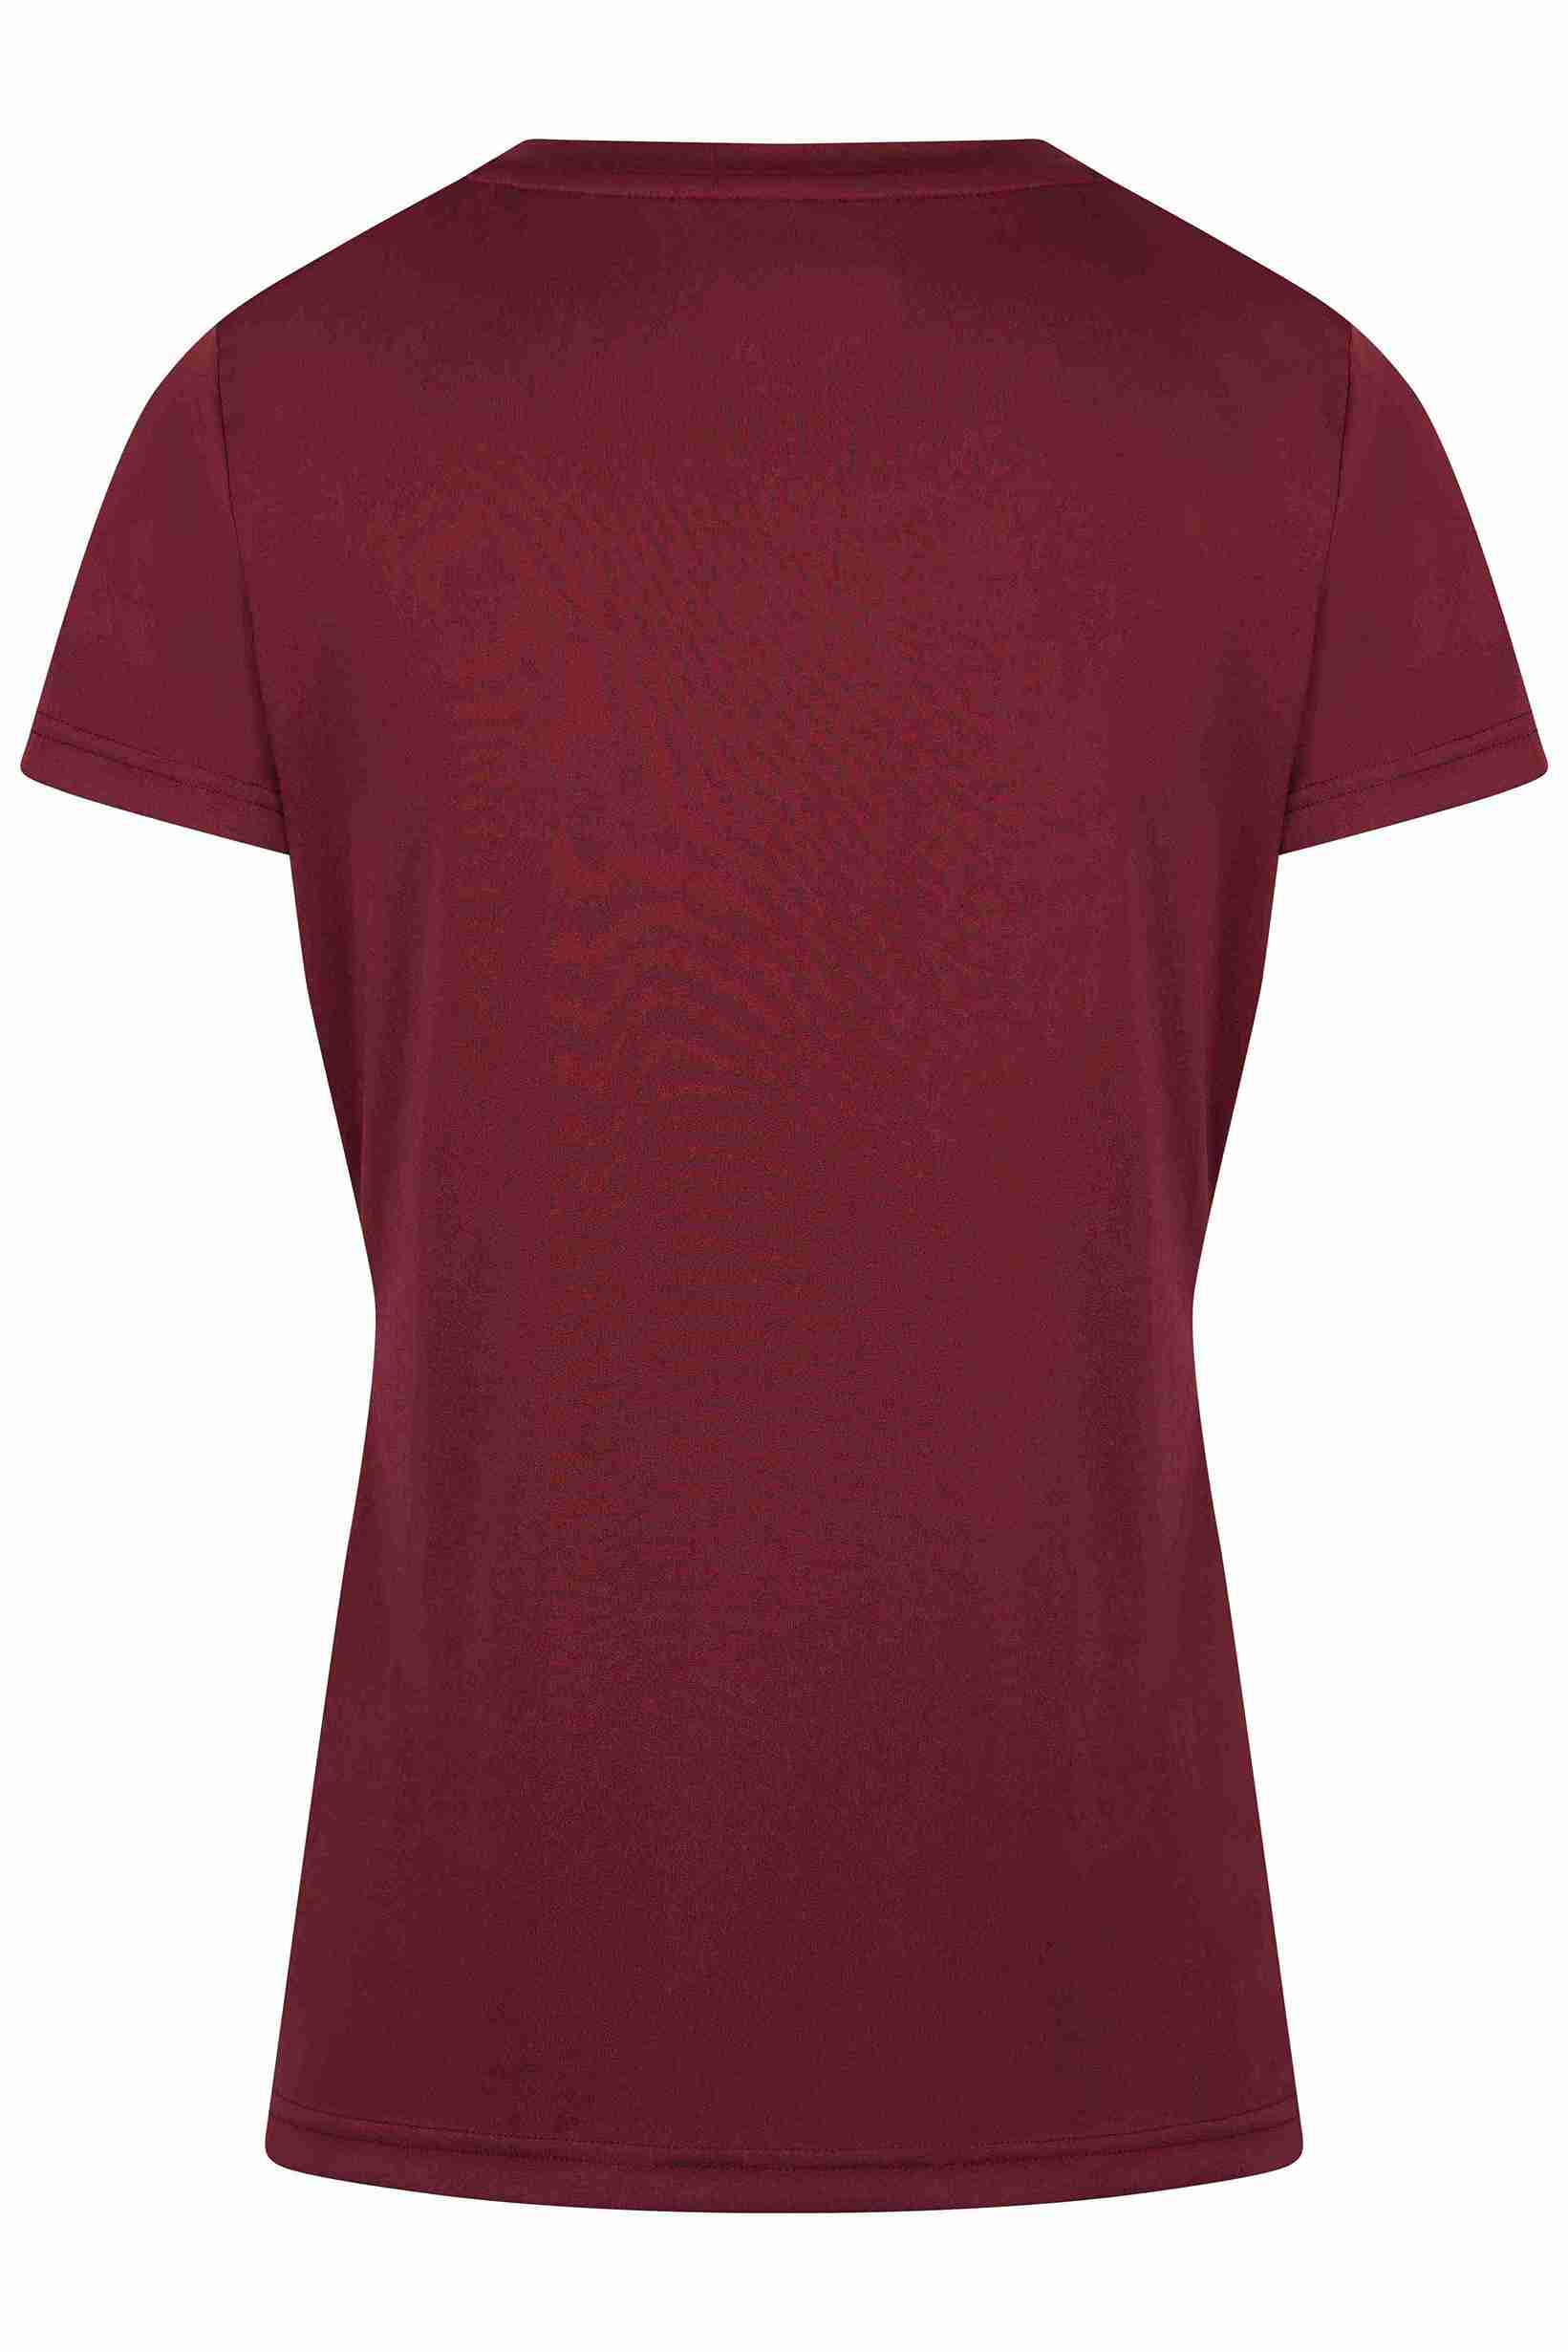 VICTOR T-Shirt T-44102D Women - Rot L